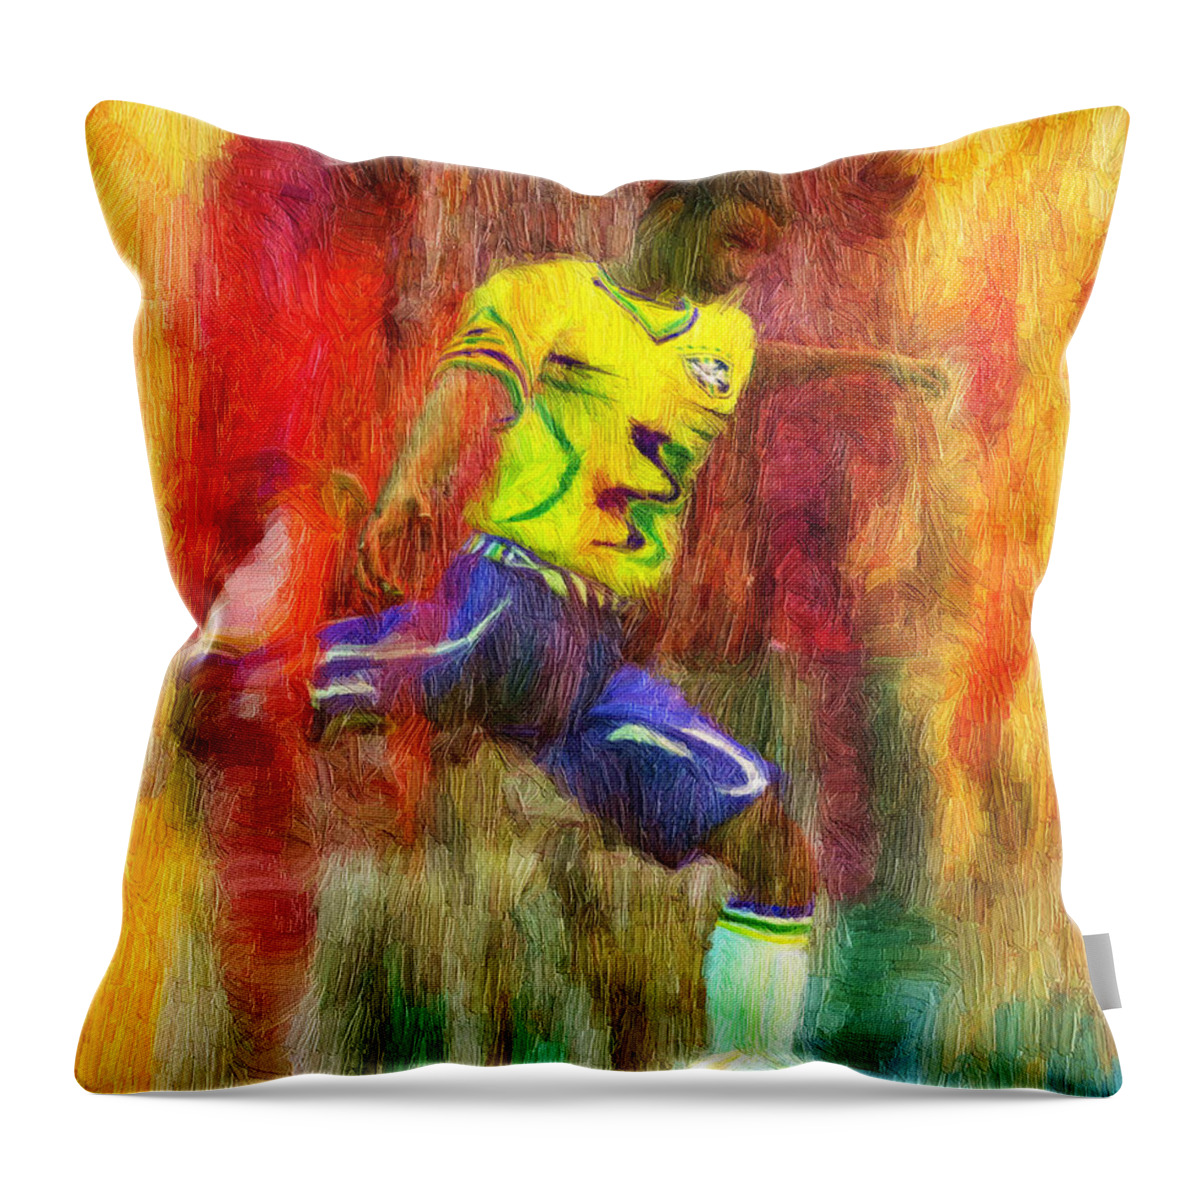 Soccer Throw Pillow featuring the digital art Brazil Soccer Team Uniform by Caito Junqueira